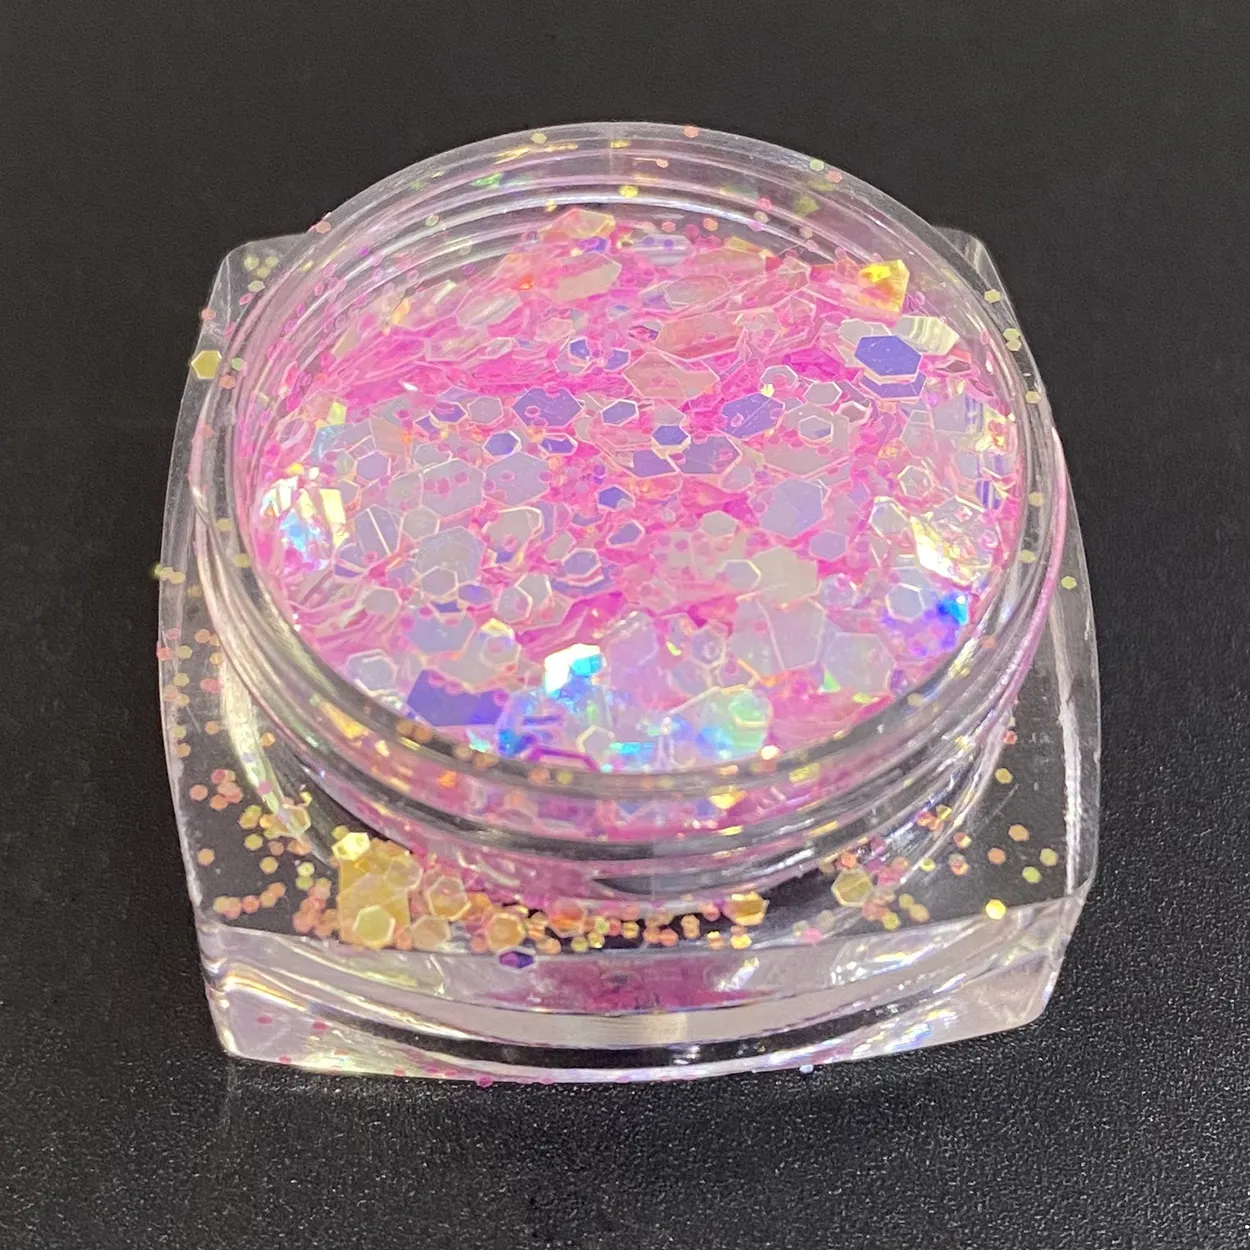 Wholesale Bulk New Design Loose Iridescence Chunky Mixed Glitter Powder For Nail Art Decoration